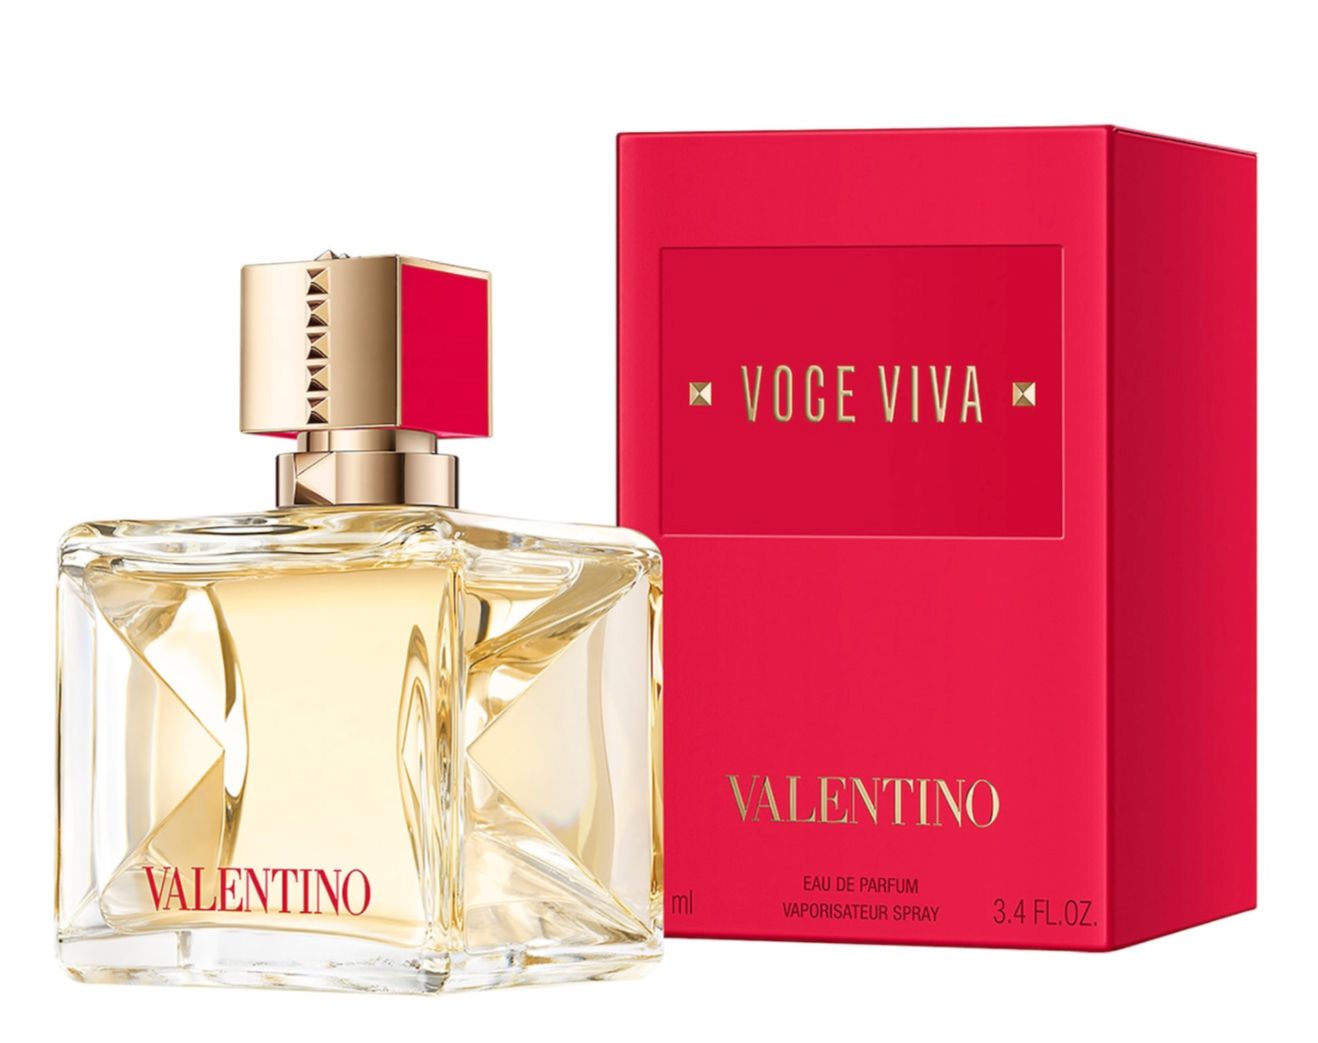 Voce Viva Valentino parfum un nou parfum de dama 2020